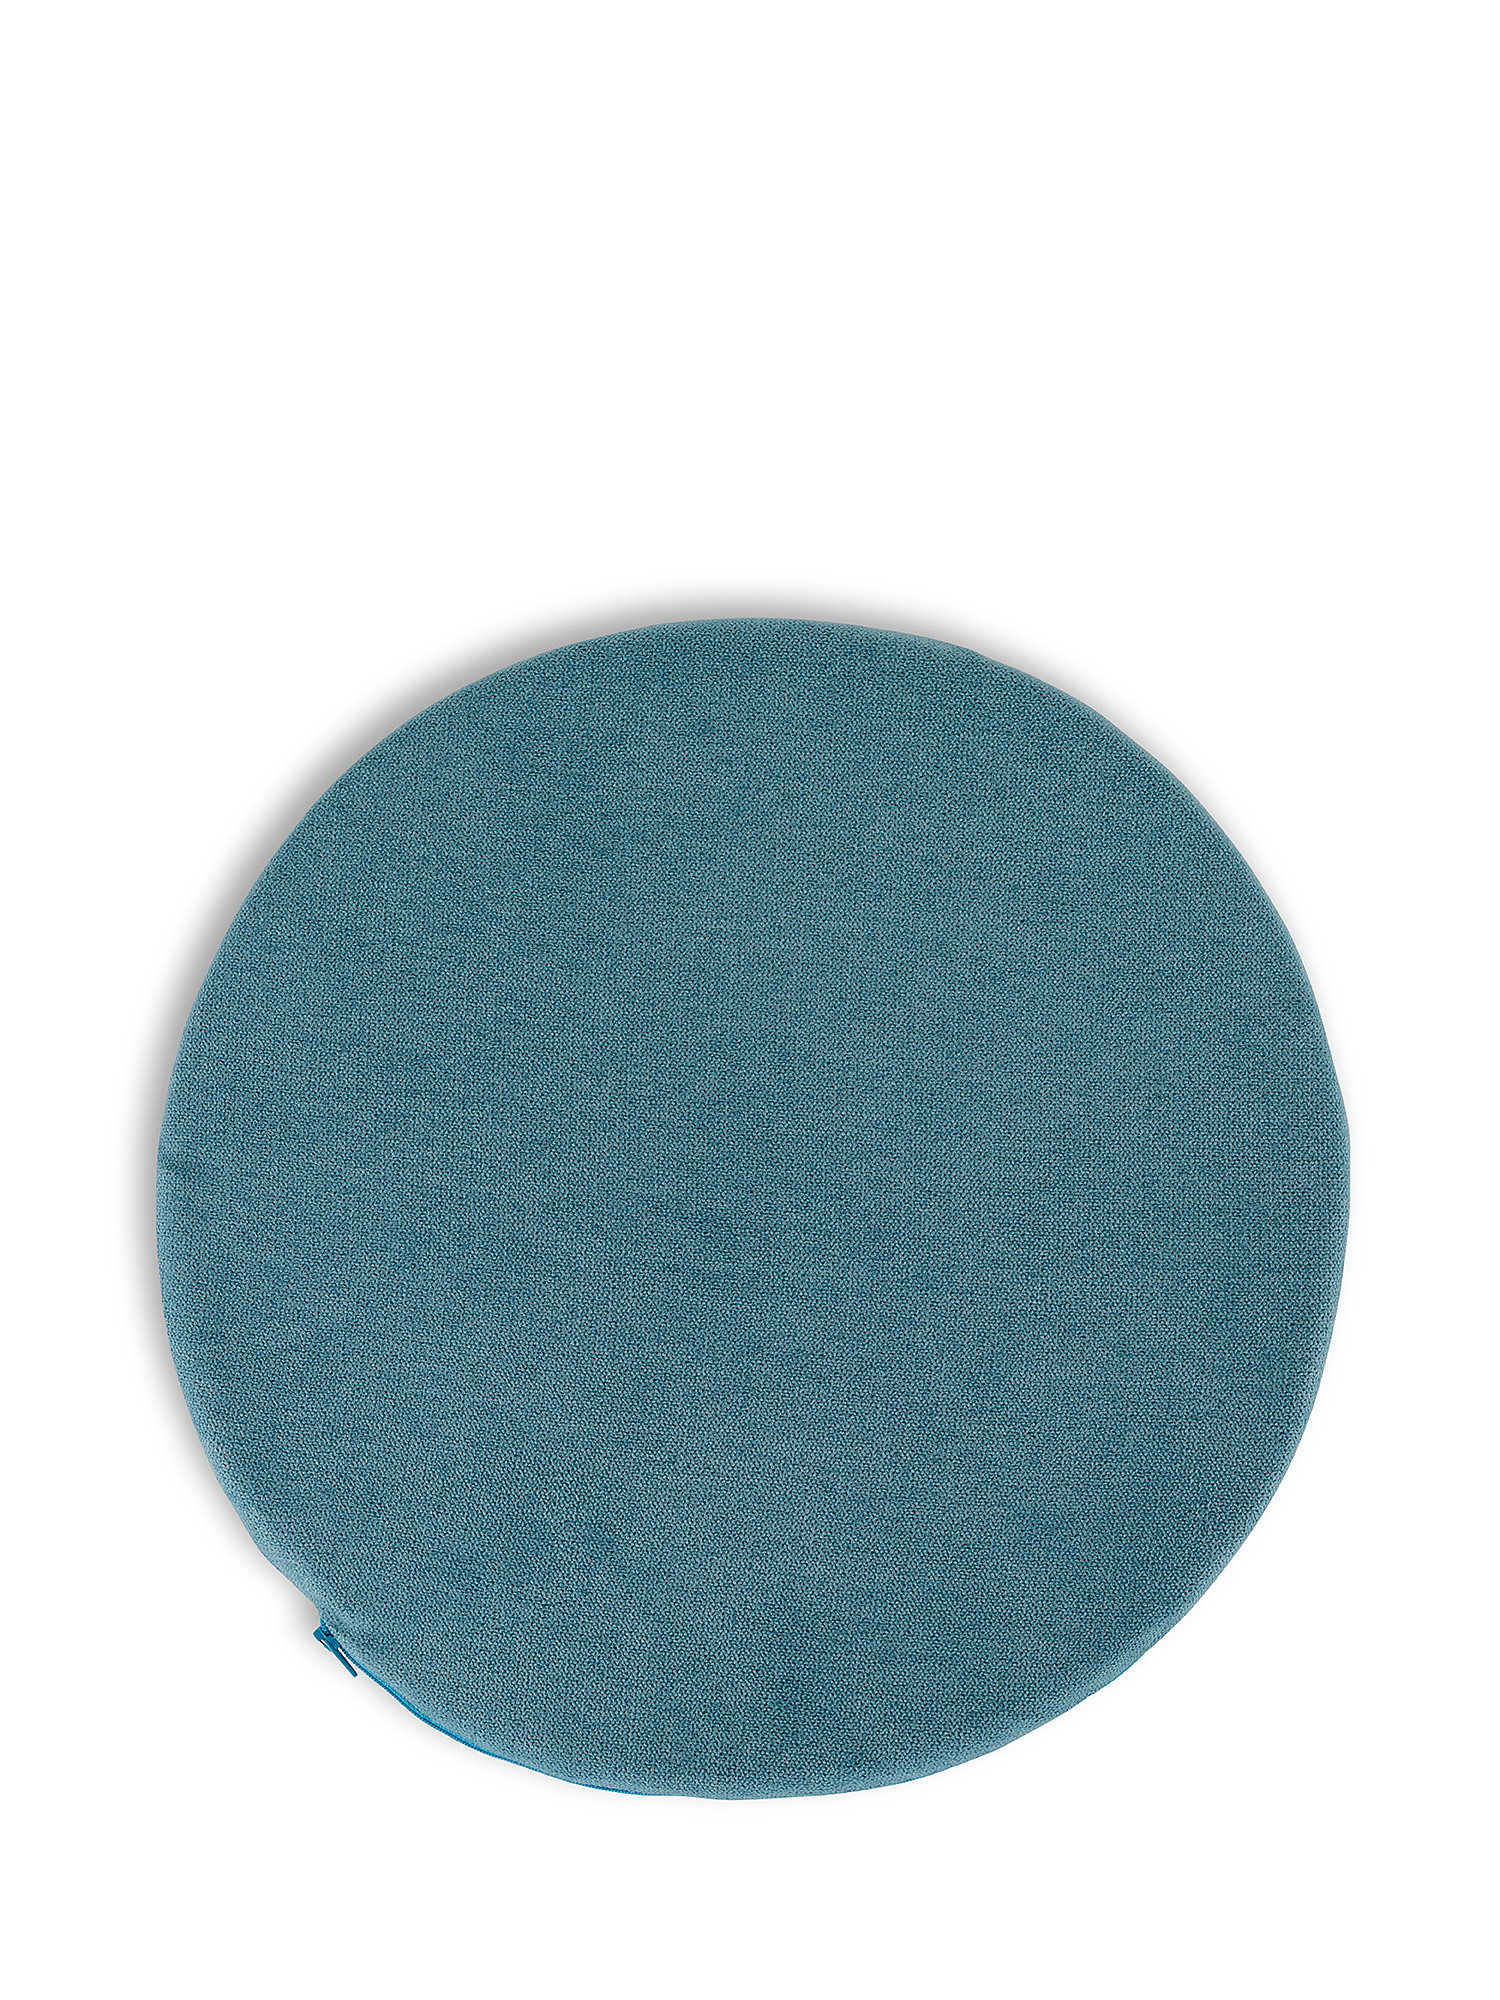 Cuscino da sedia in cotone tinta unita, Blu, large image number 0